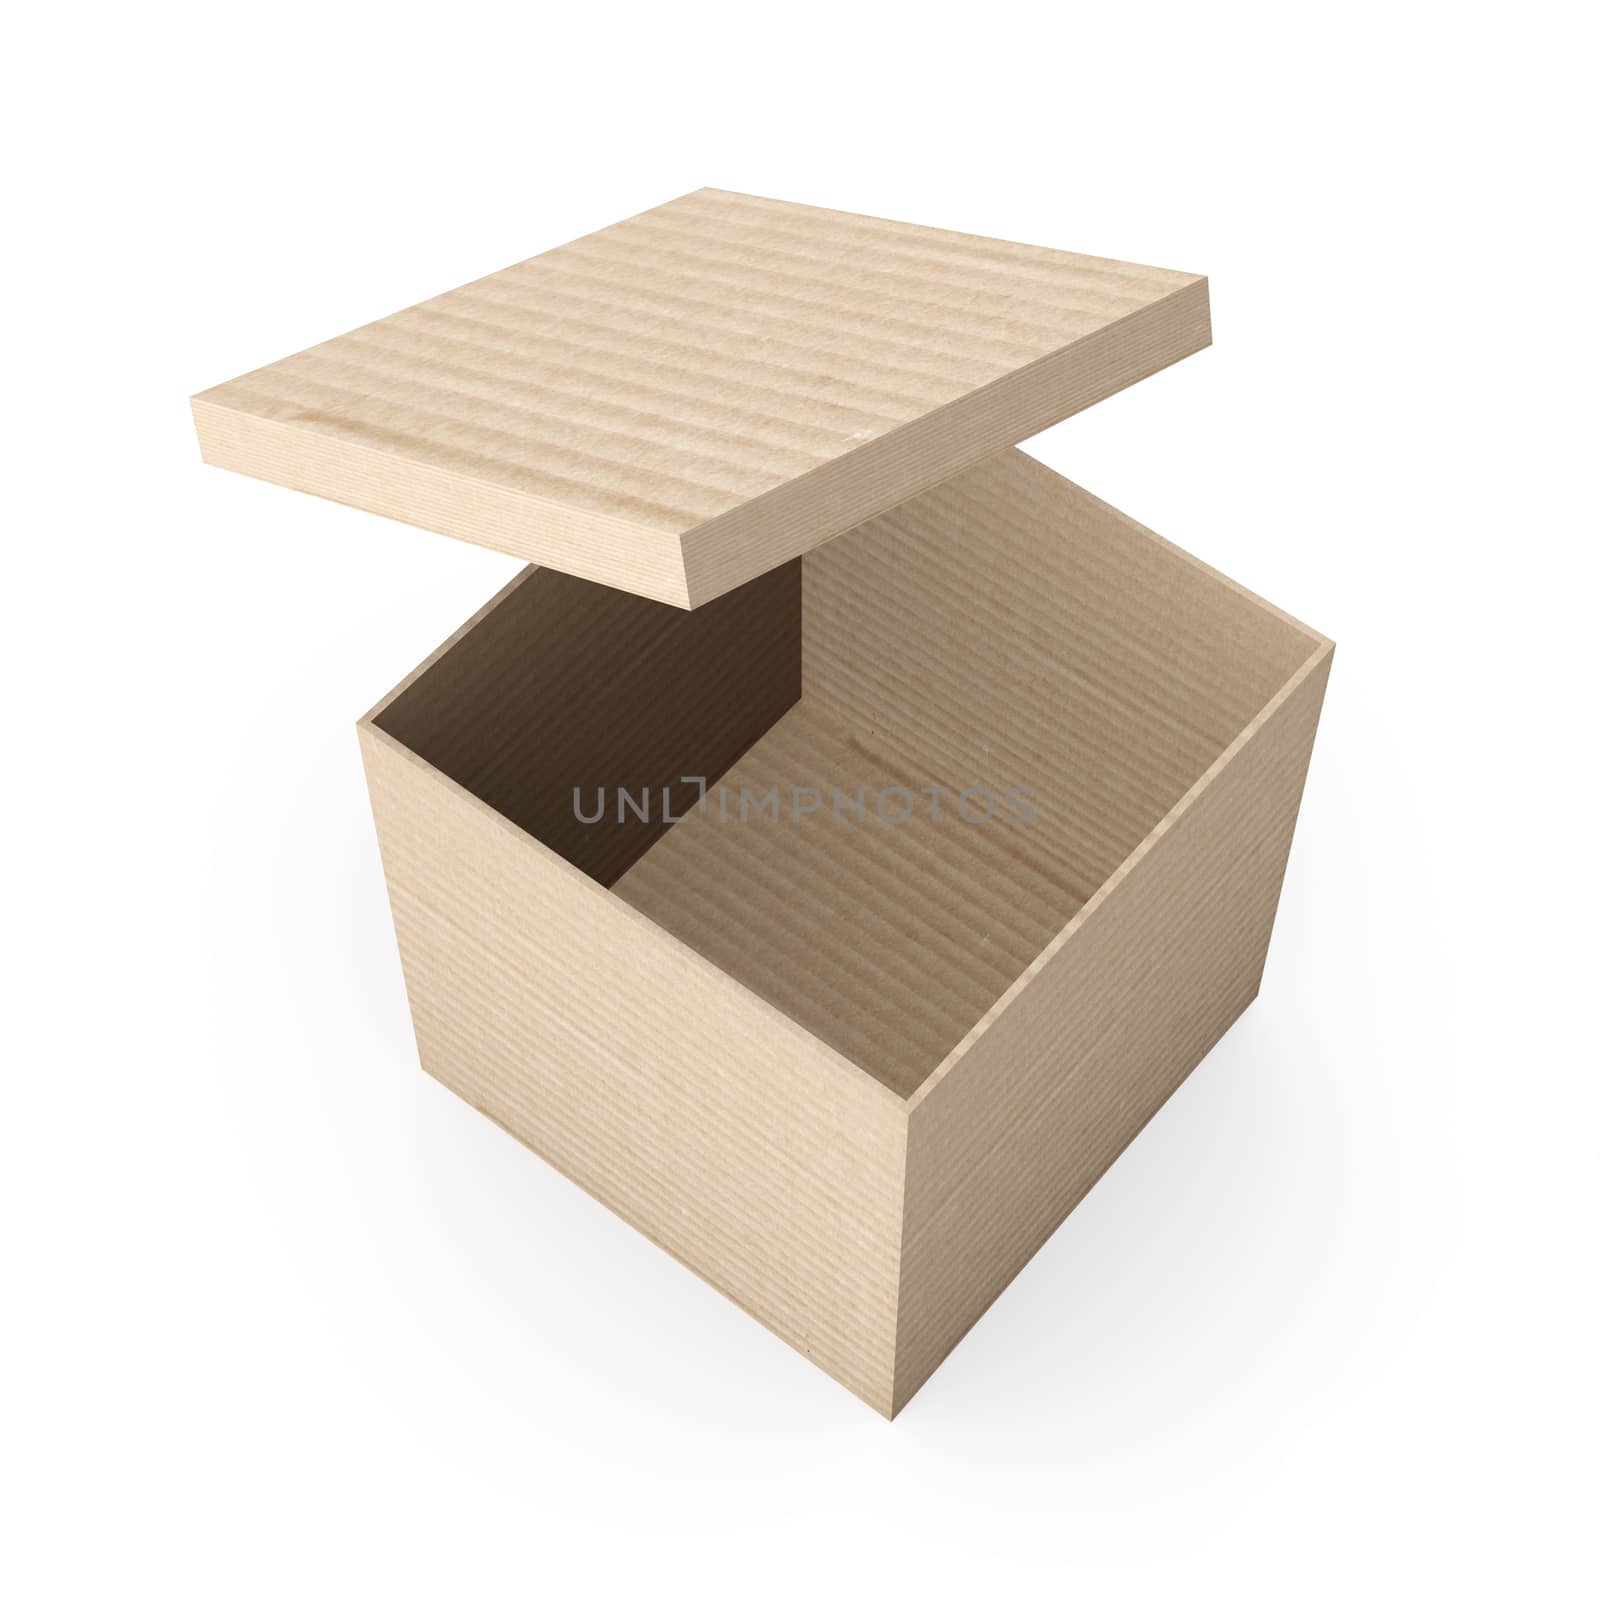 Carton Box by Spectral